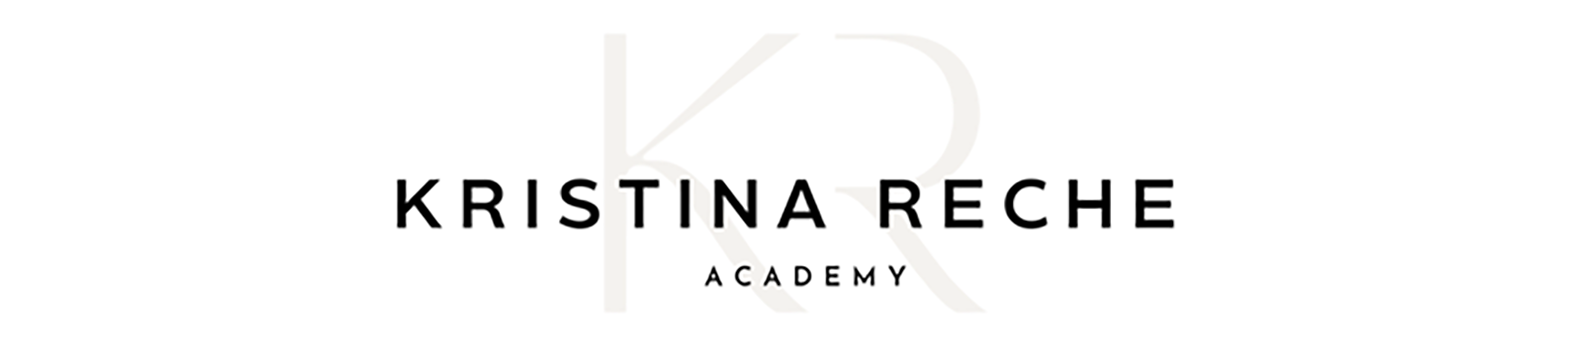 Kristina Reche Academy